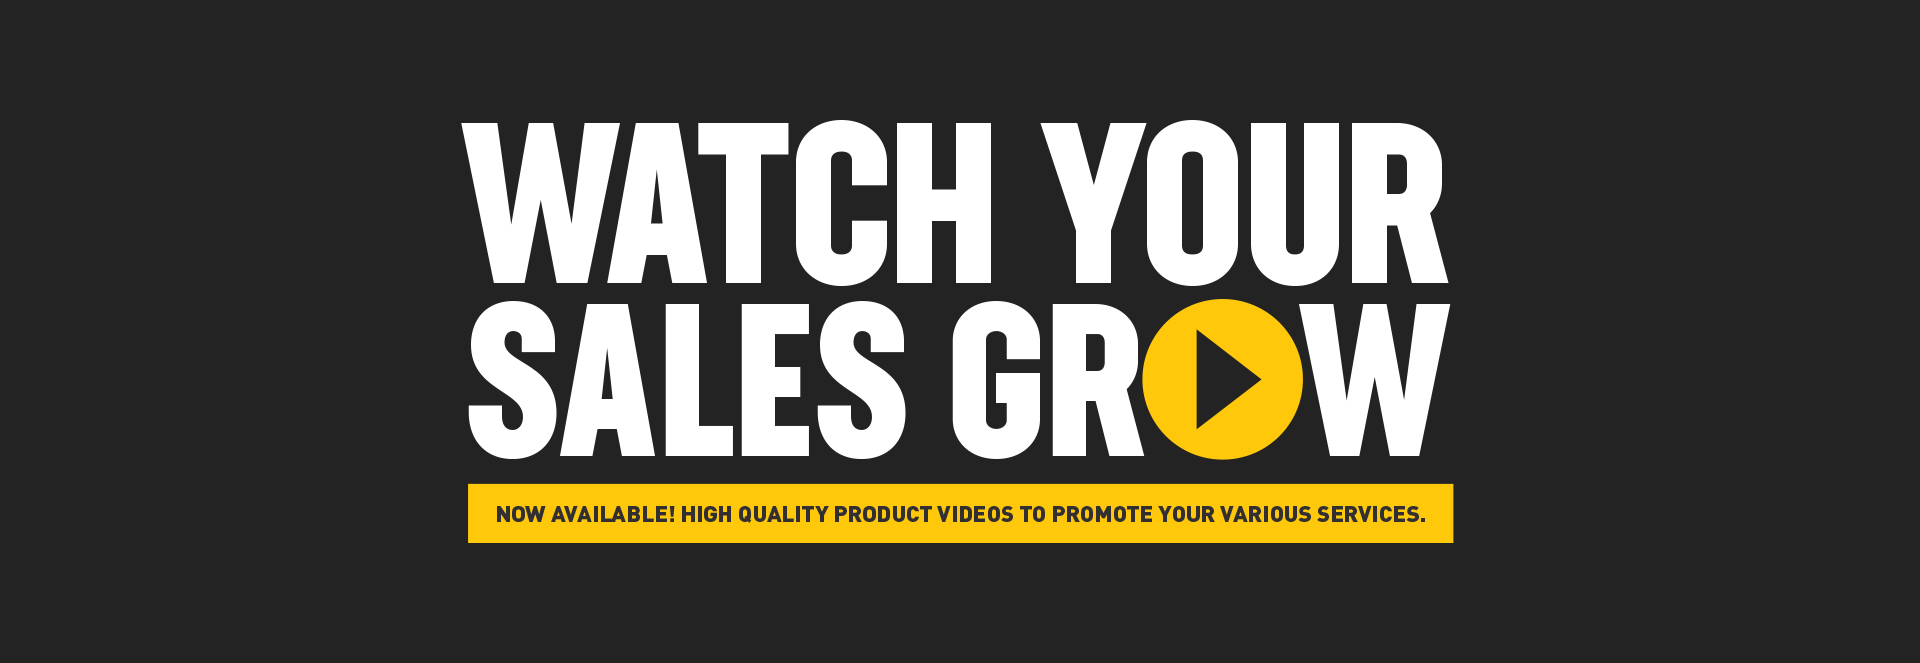 Watch Your Sales Grow Video Marketing Program